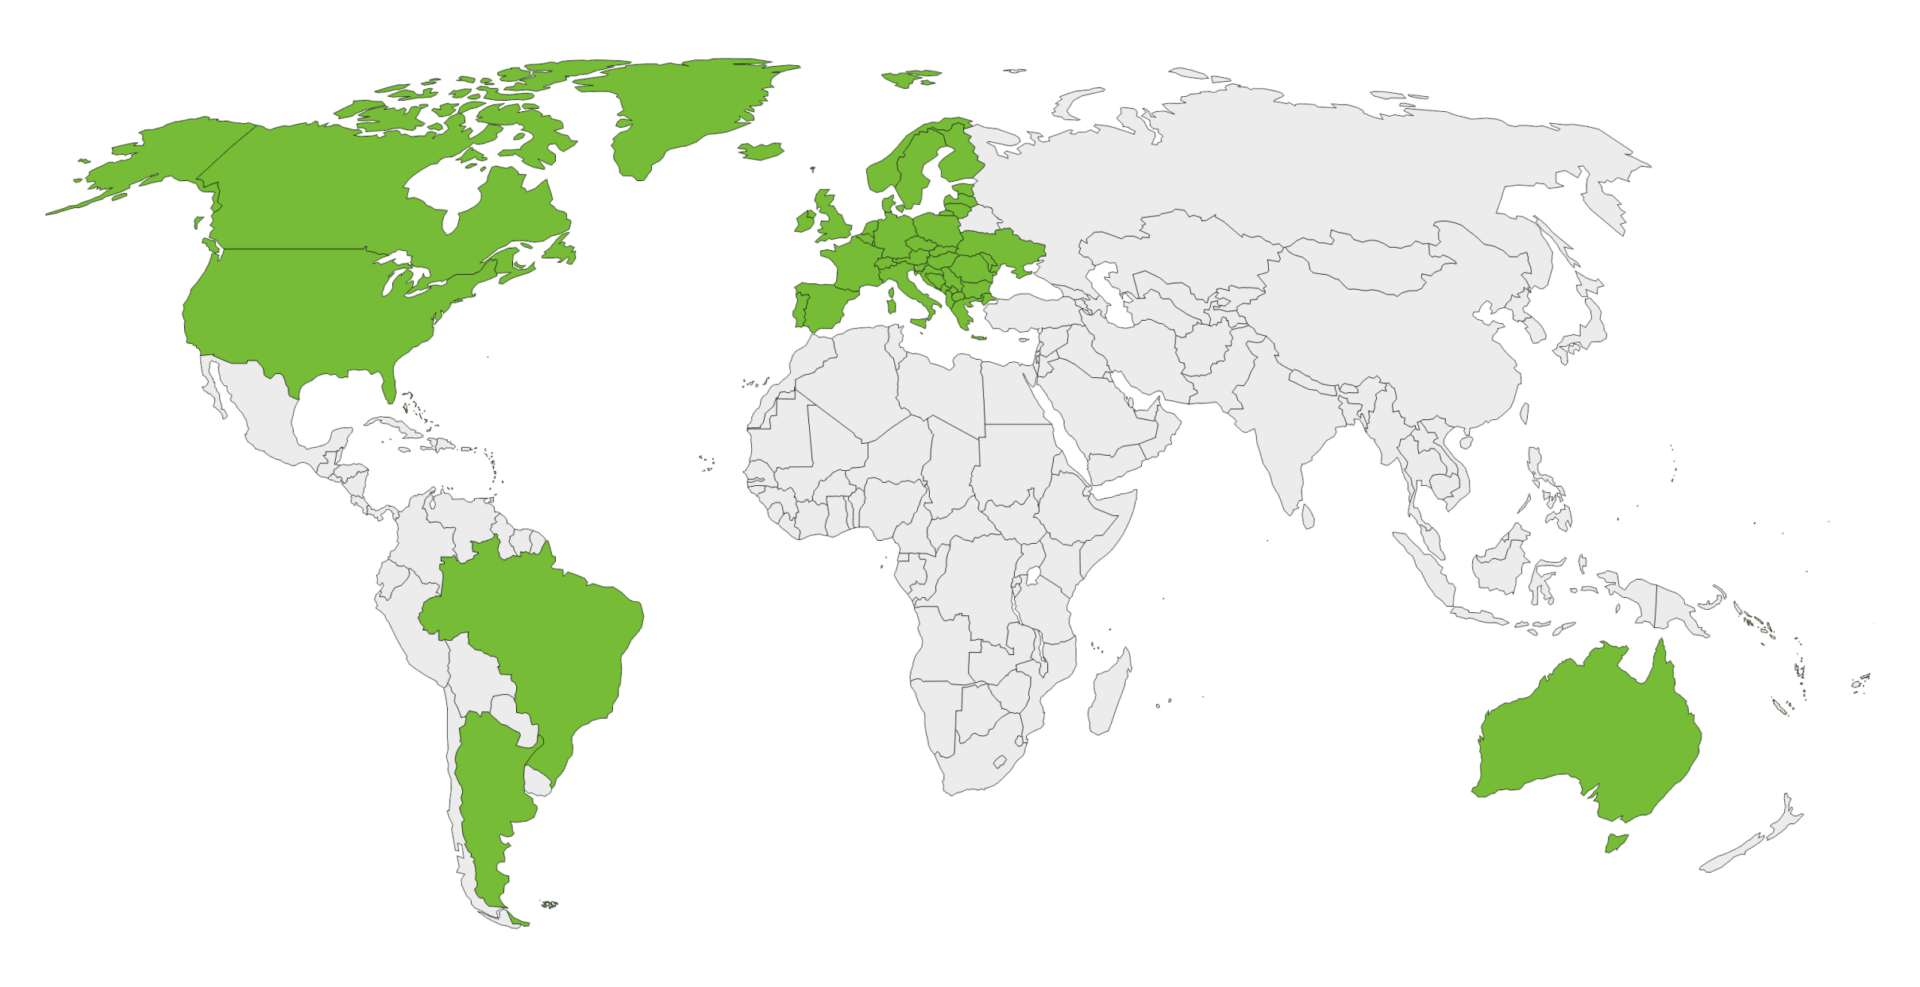 World map, auto-mow markets